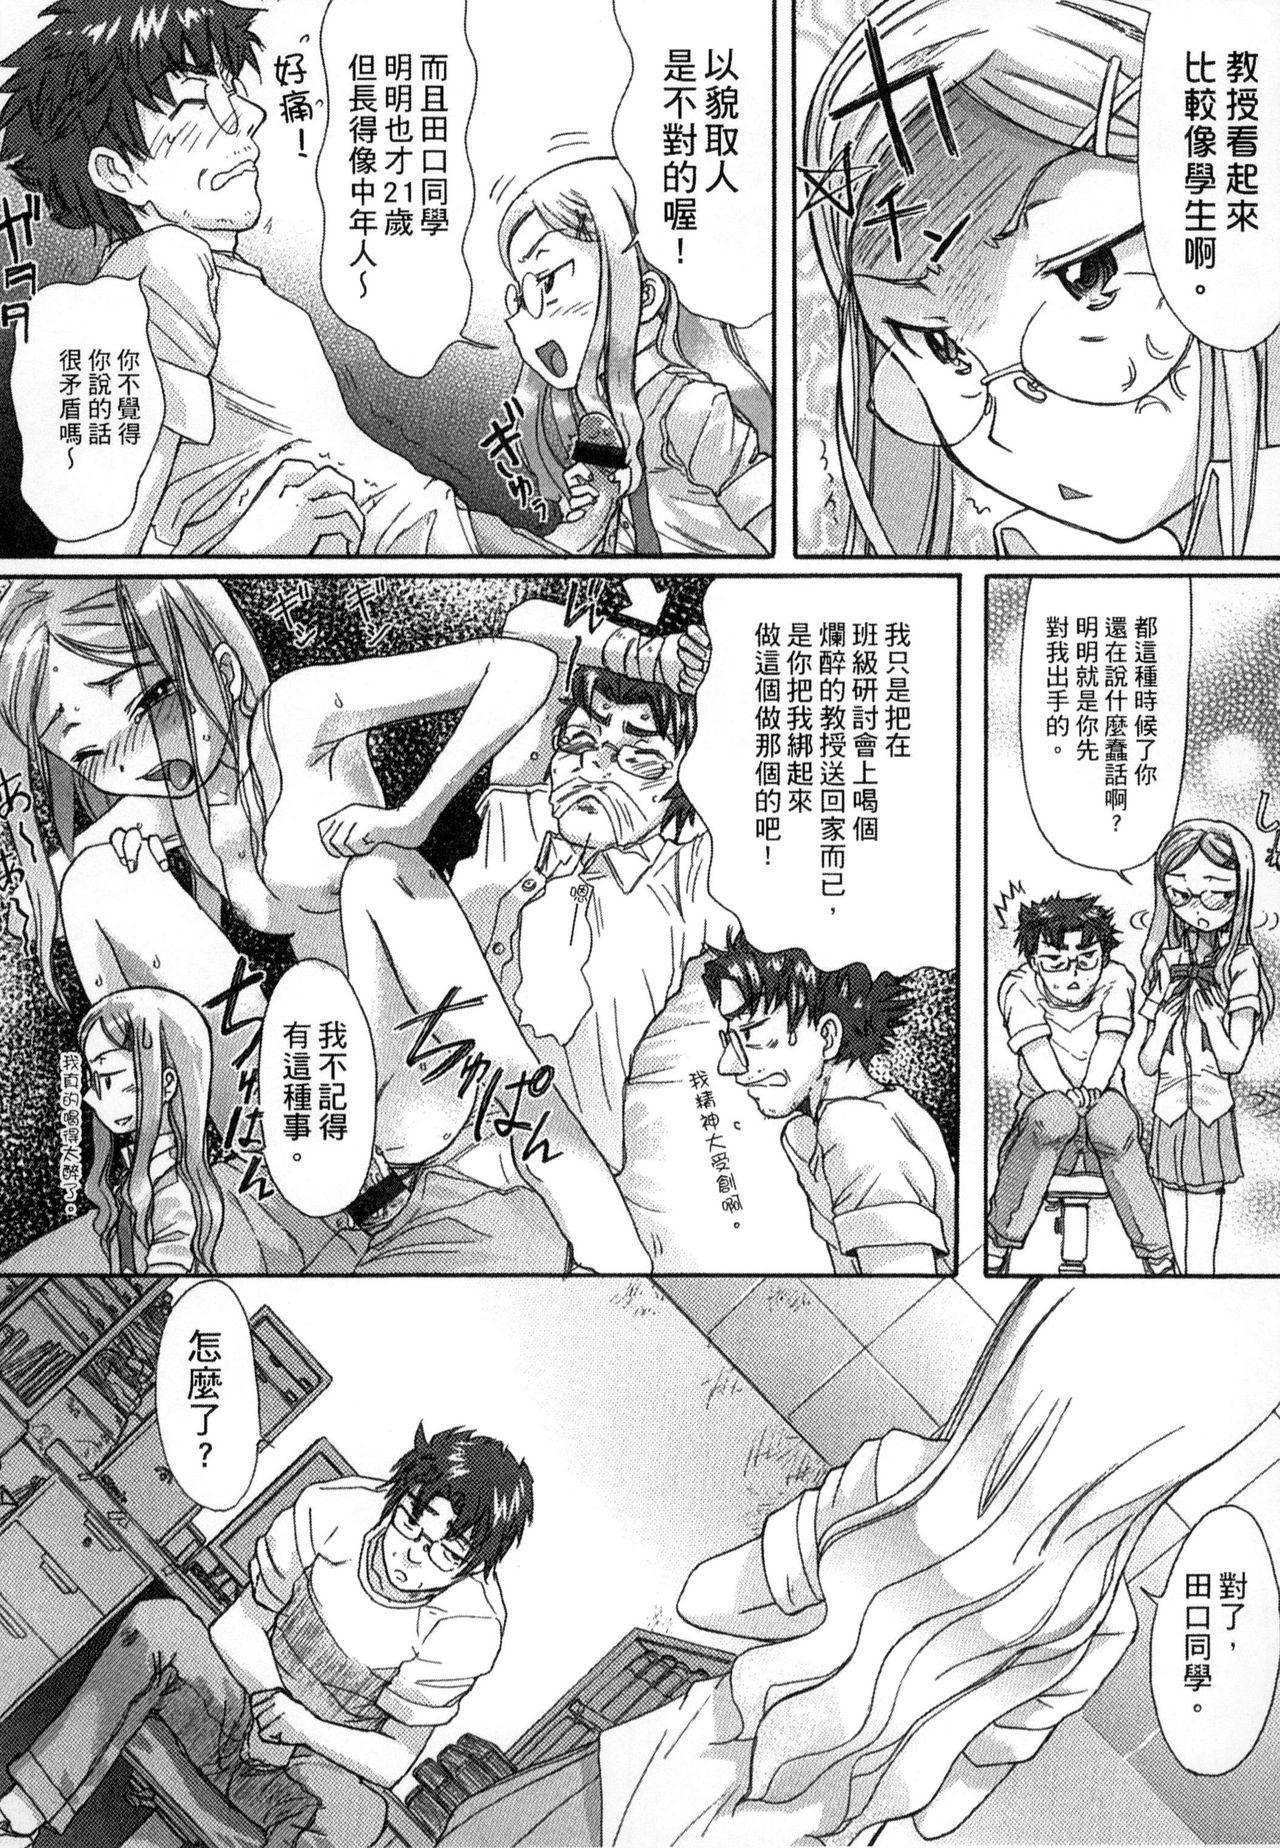 Mulher Gakkou Shitei Baile - Page 9